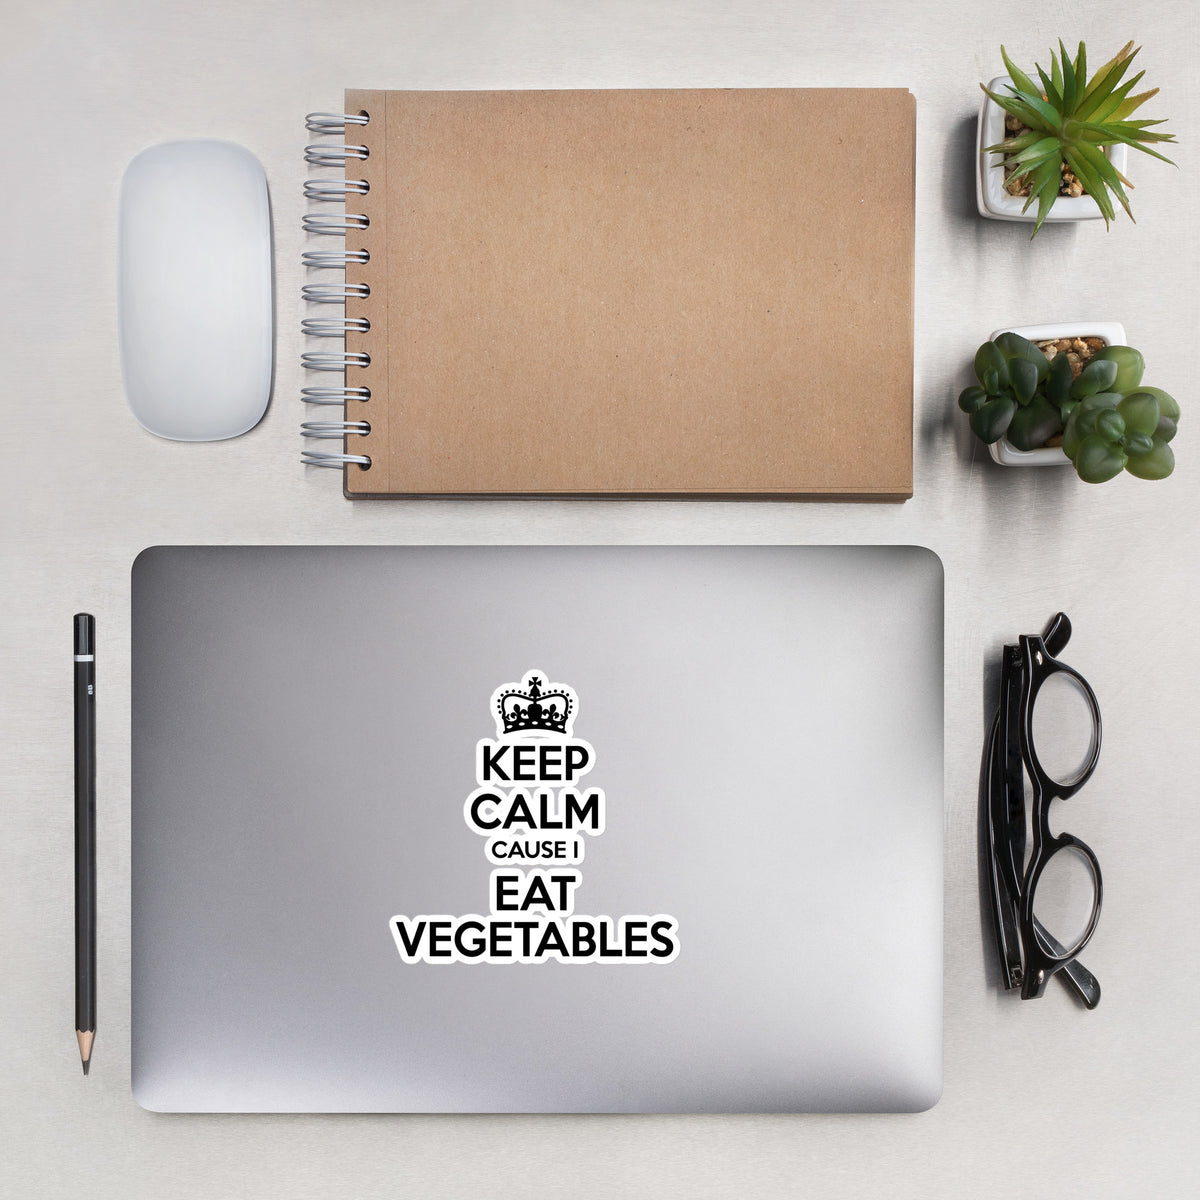 KEEP CALM EAT VEGETABLES Sticker